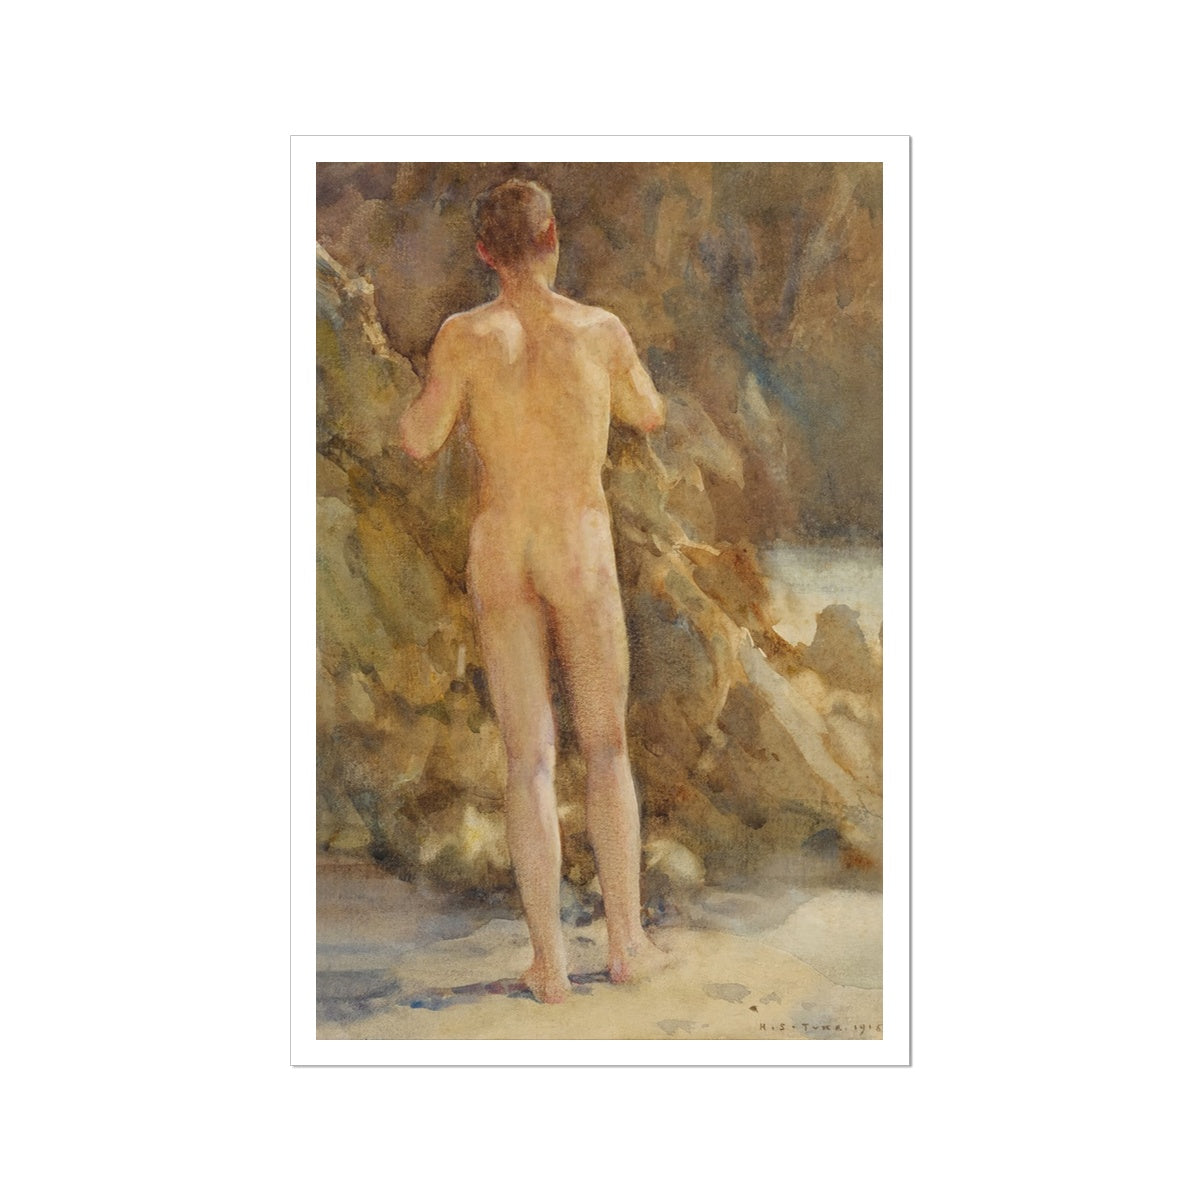 Henry Scott Tuke Open Edition Art Print. Male Nude by the Sea. Art Gallery Historic Art